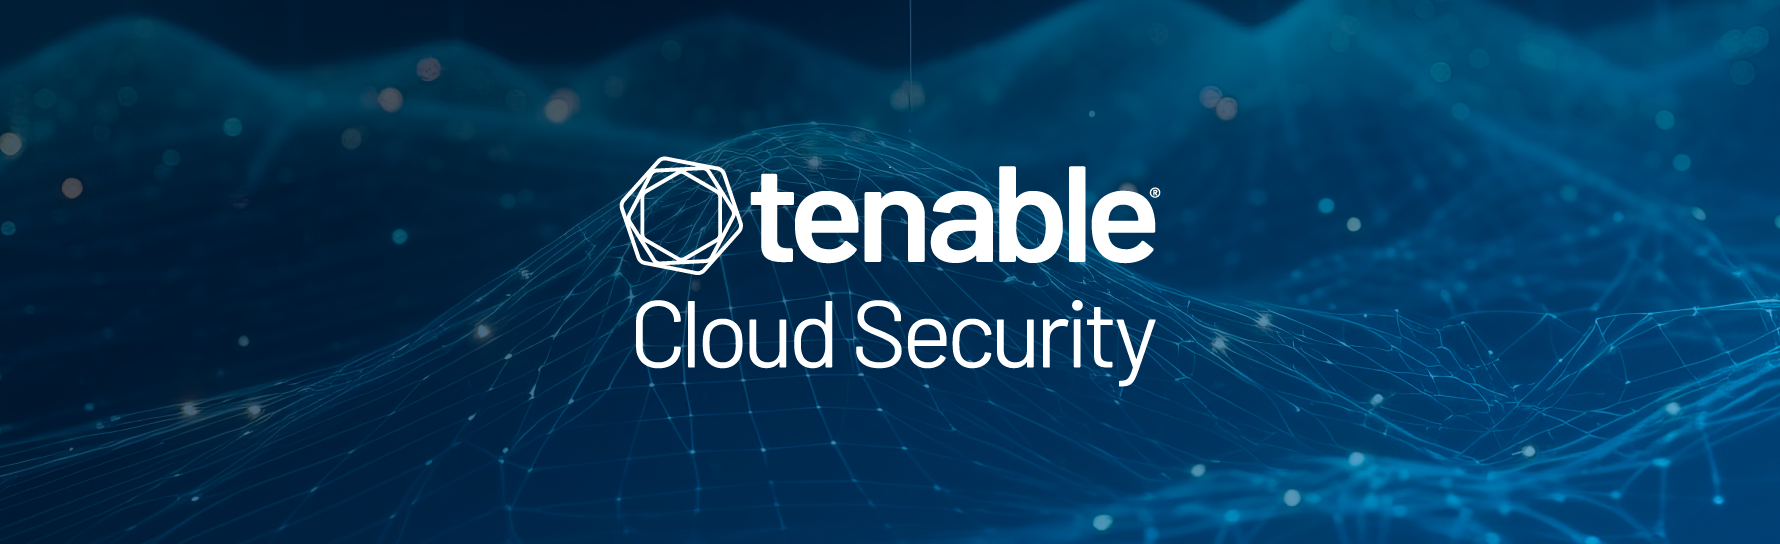 Tenable Cloud Security